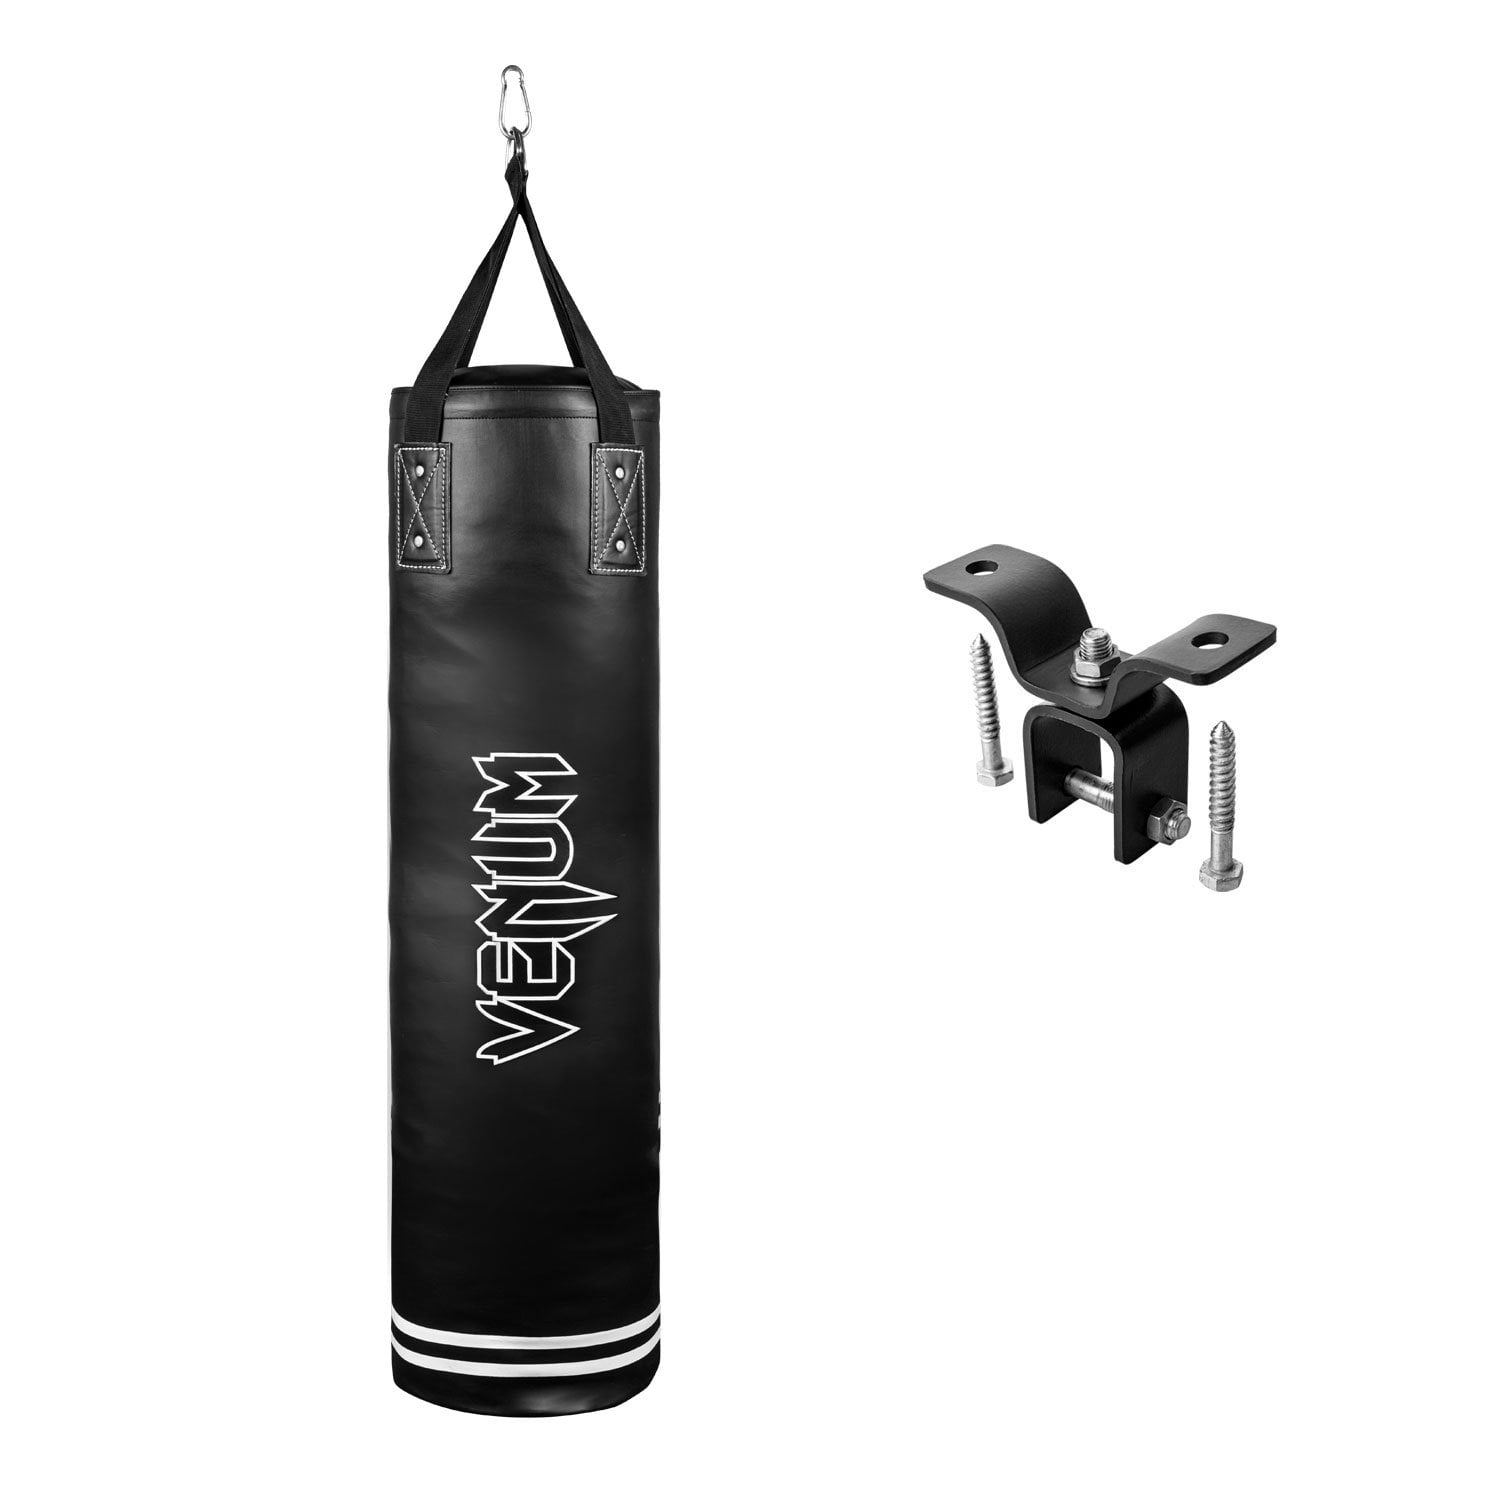 Everlast Hanging Mma/boxing Training Heavy Punching Bag : Target